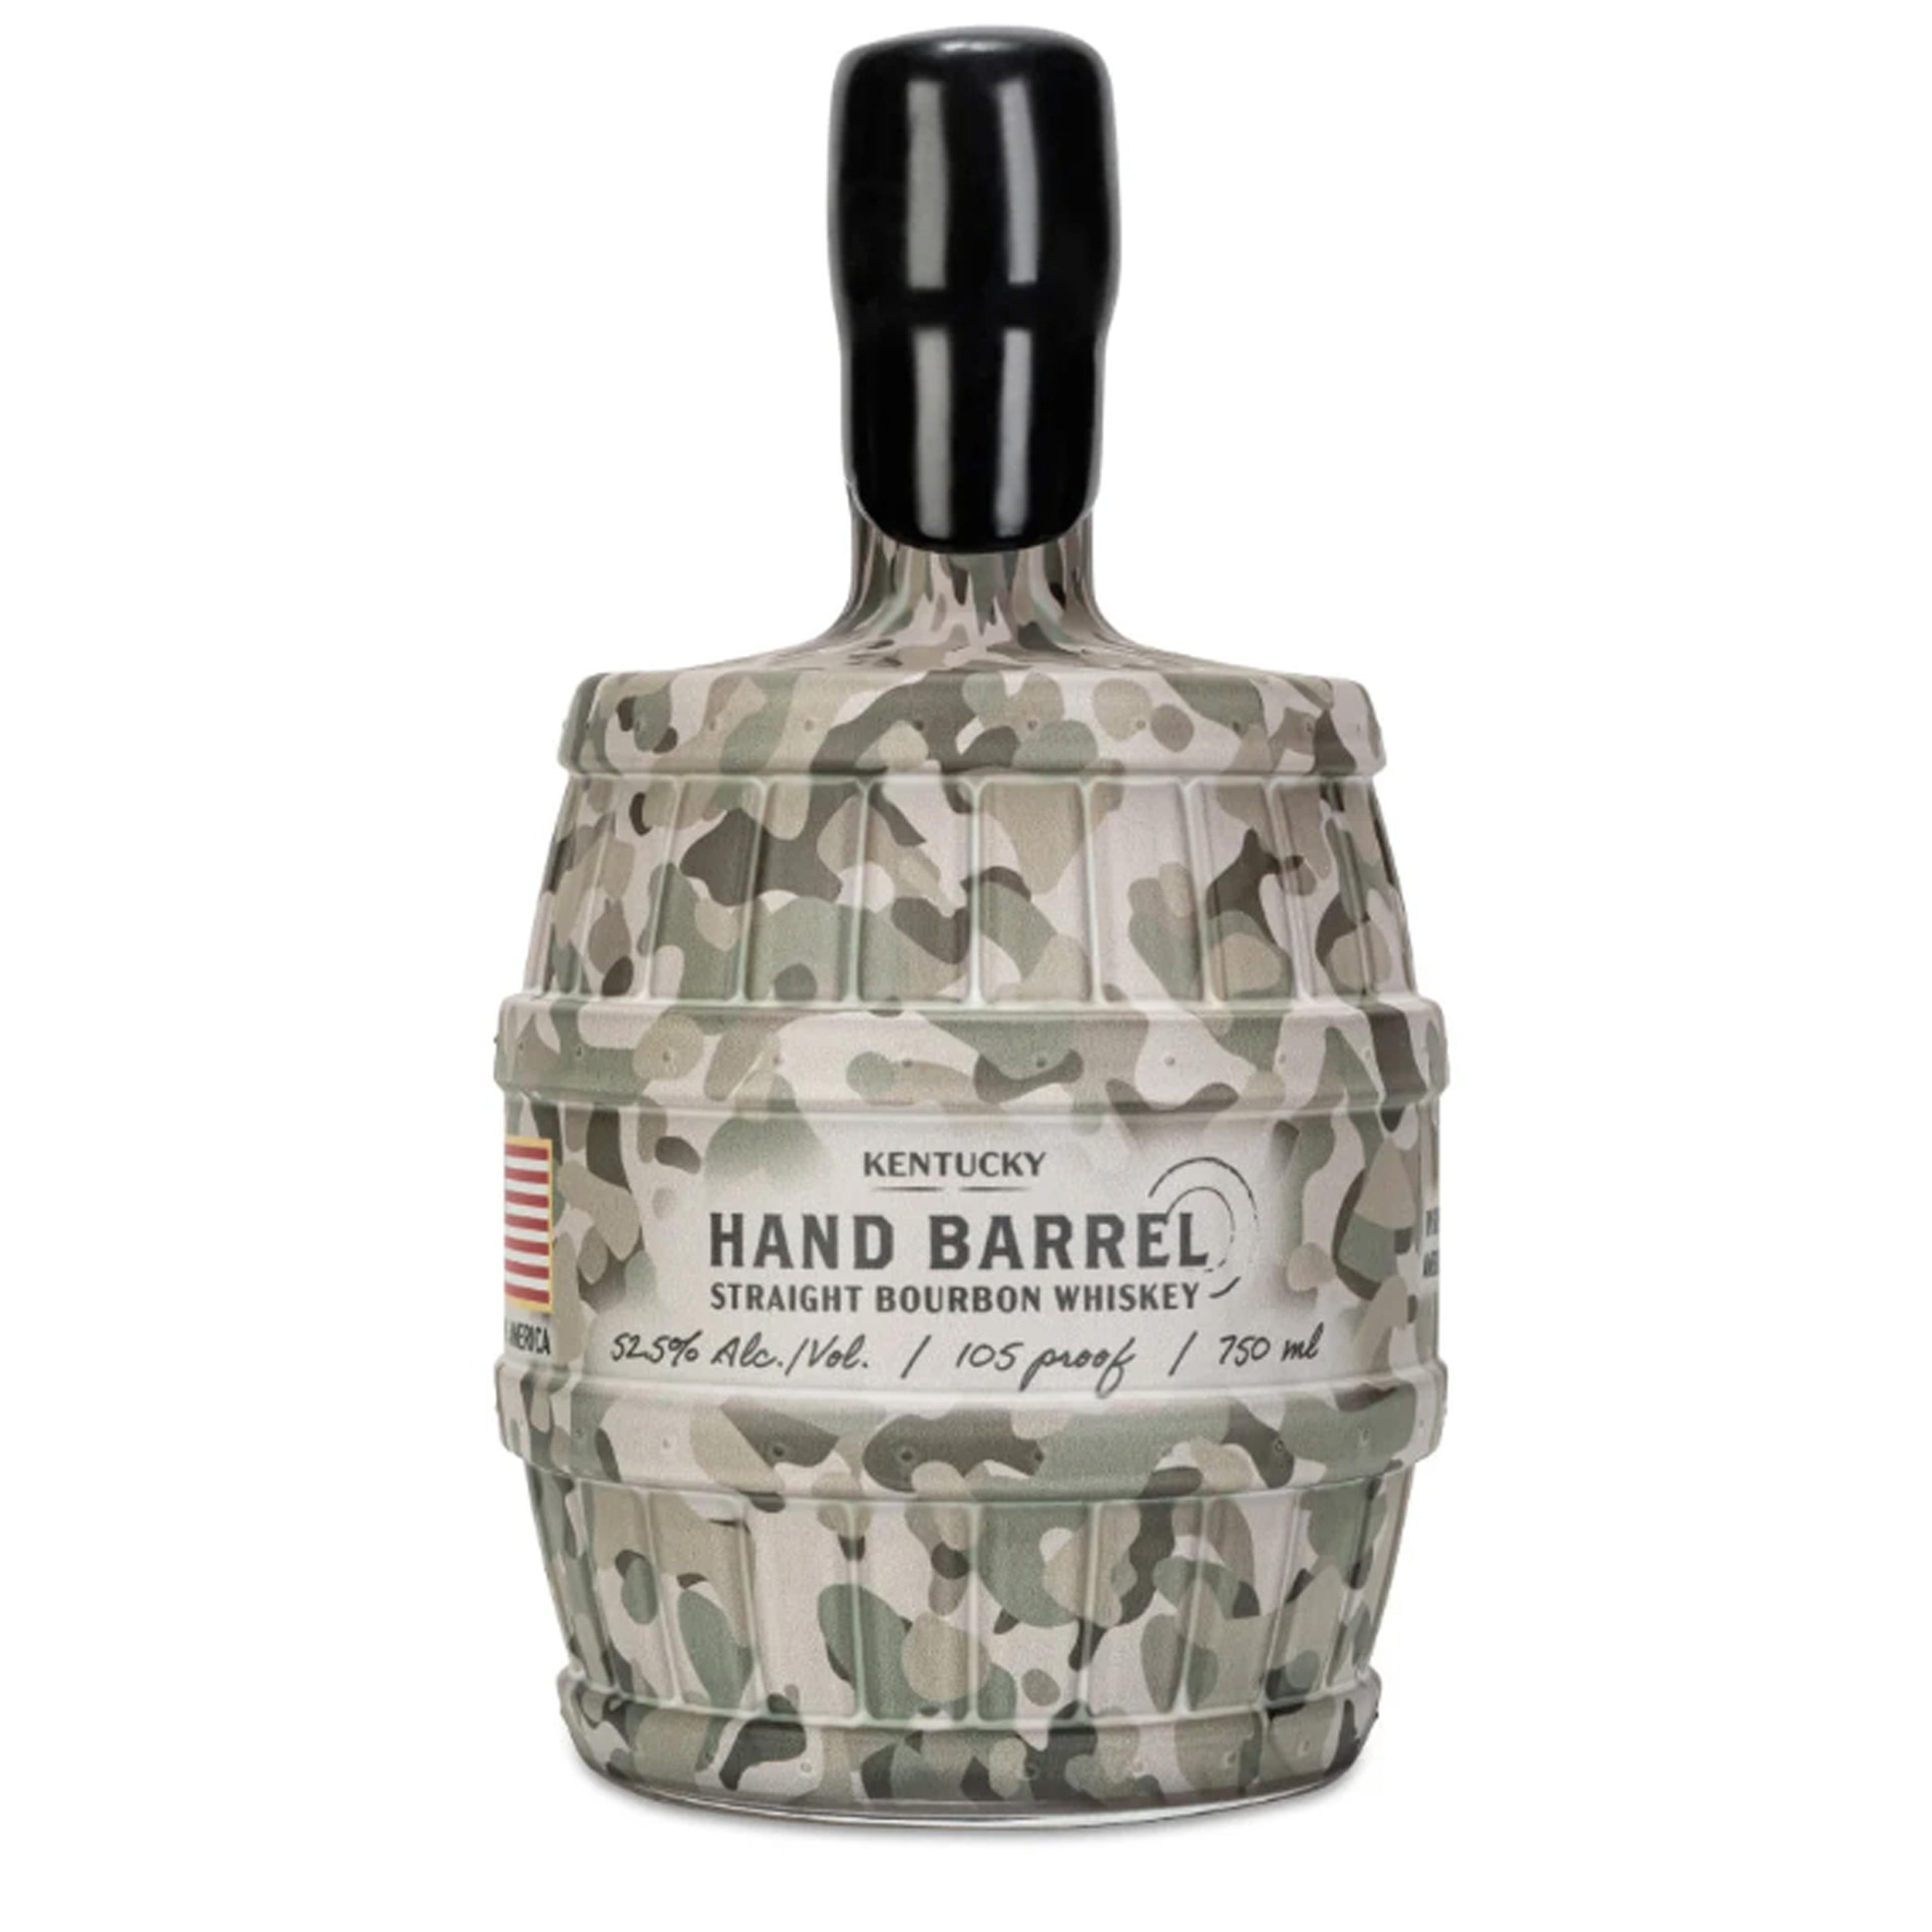 Hand Barrel Special Operations L.T.O. Kentucky Straight Bourbon